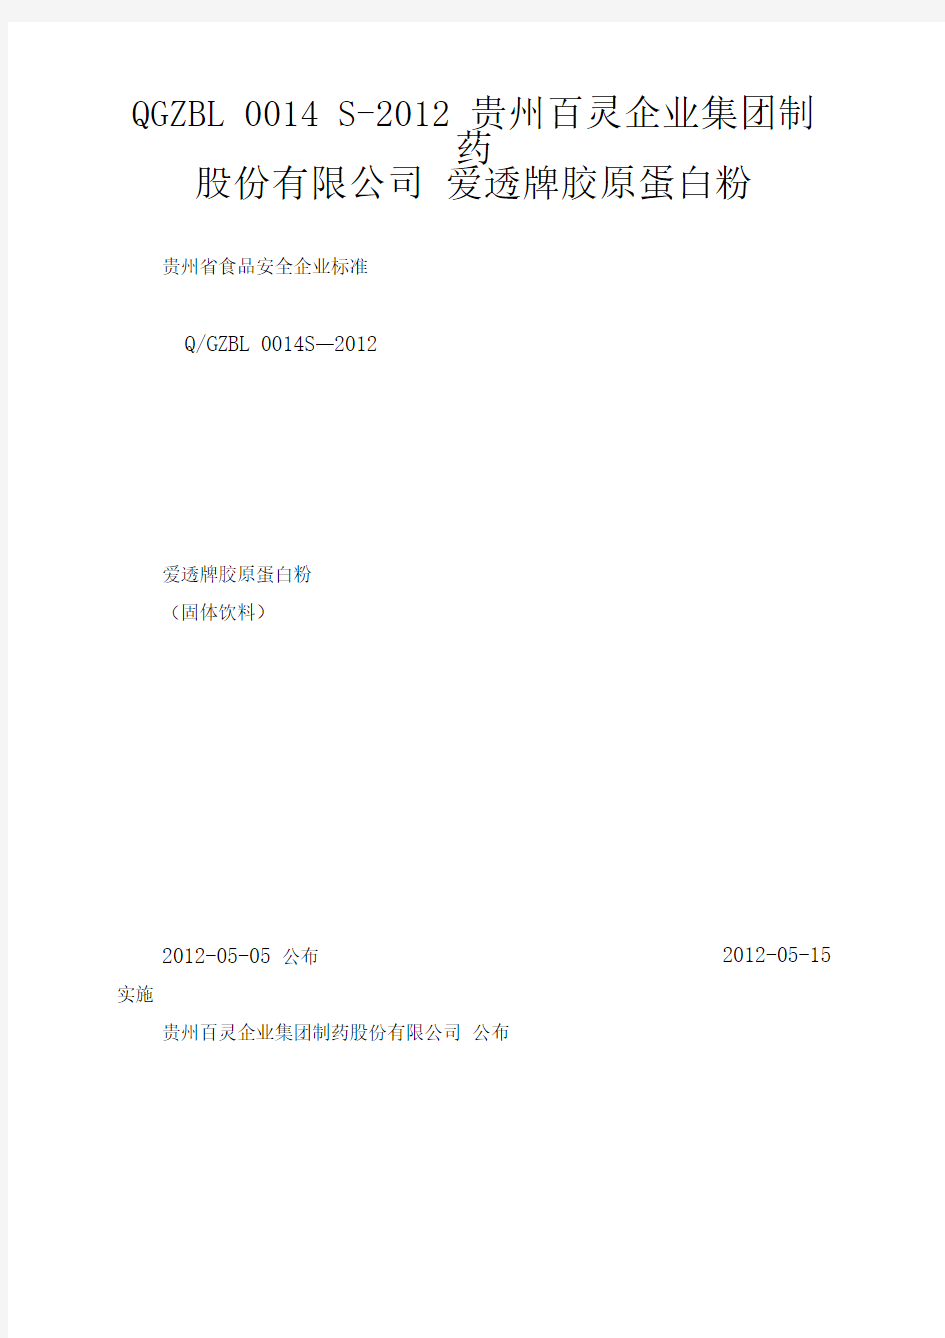 QGZBL0014S-2012贵州百灵企业集团制药股份有限公司爱透牌胶原蛋白粉